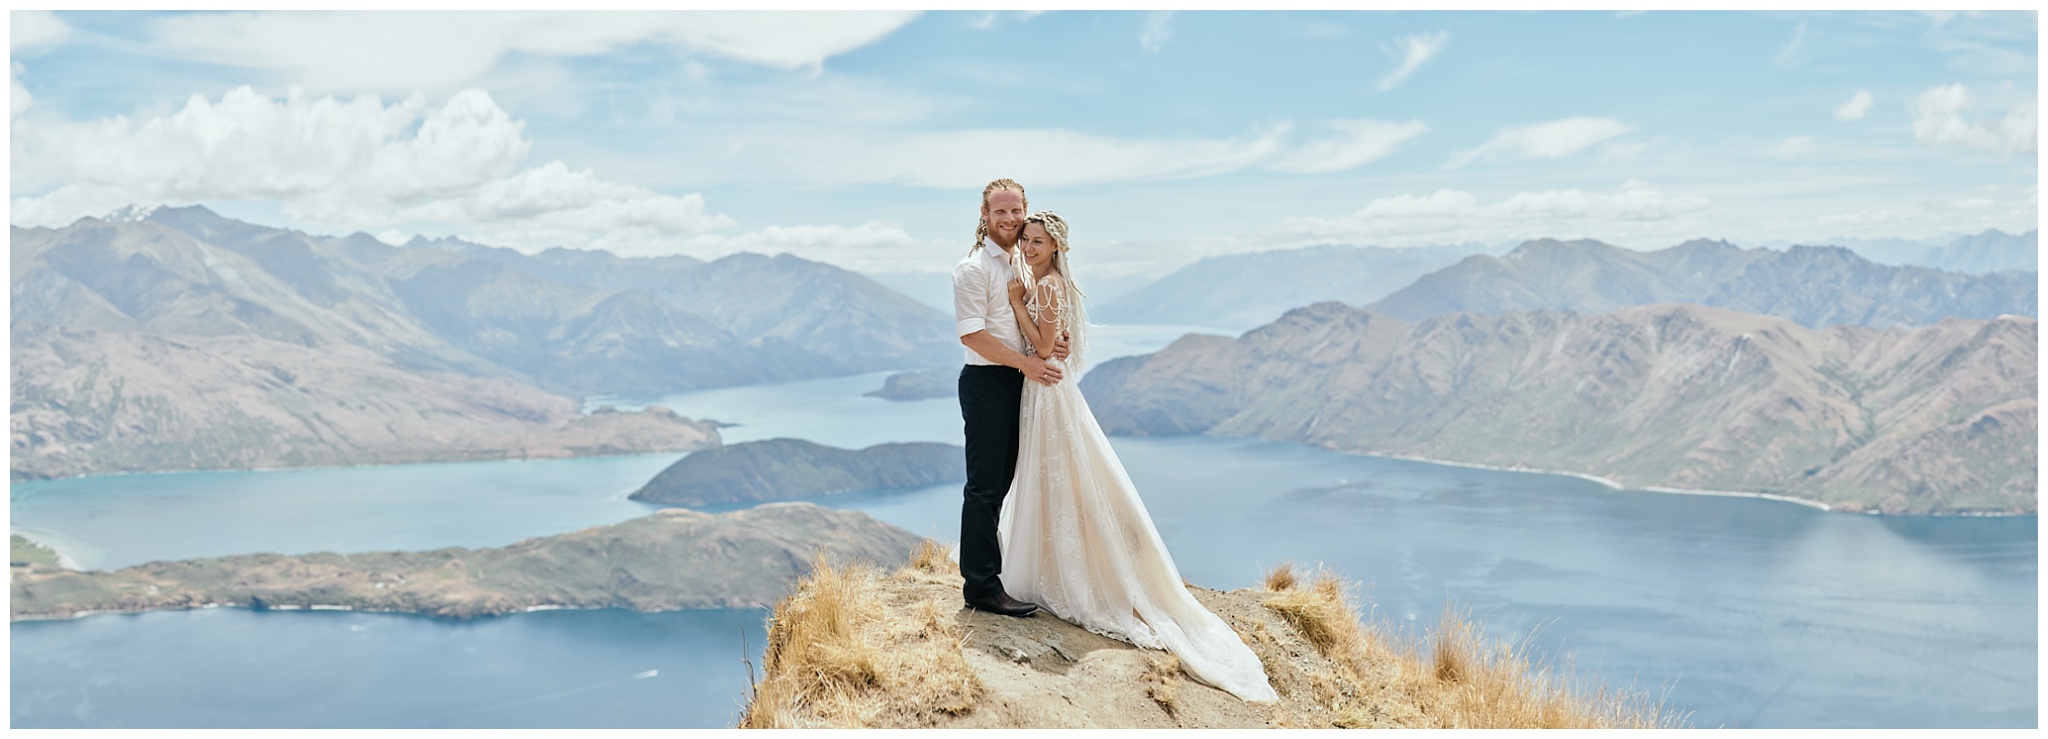 Queenstown New Zealand Prewedding Photographer ニュージーランド クイーンズタウン ウェディング 前撮り フォトグラファー (Copy)